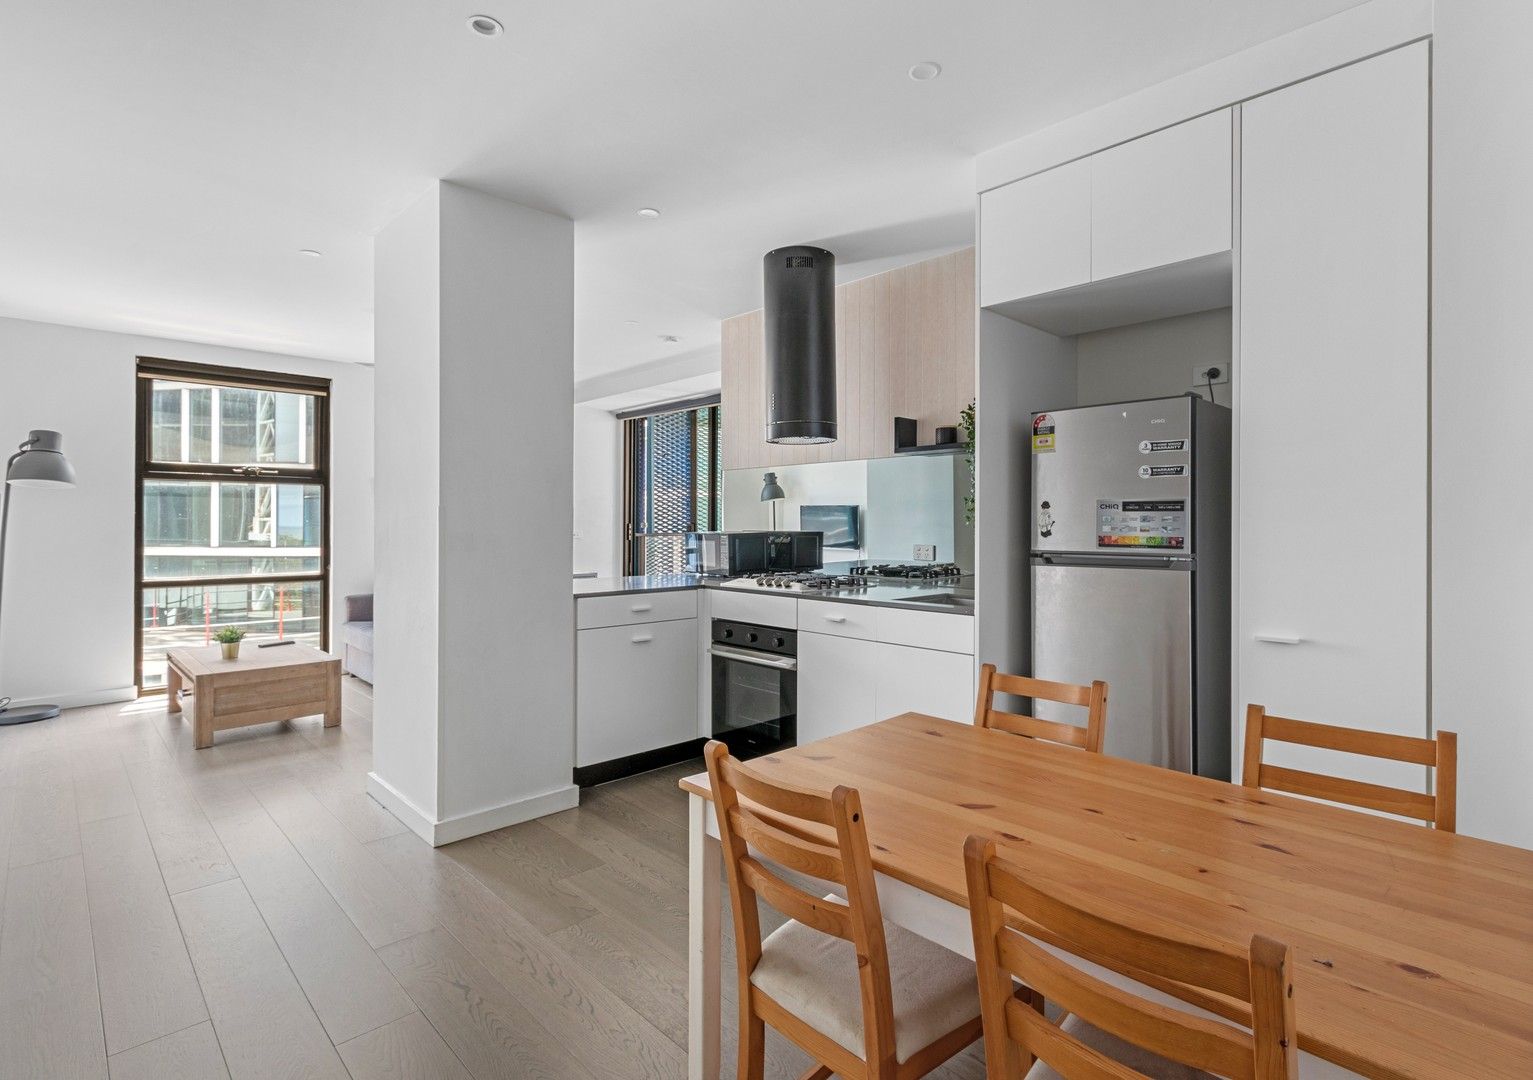 2 bedrooms Apartment / Unit / Flat in 704/6 St Kilda Road ST KILDA VIC, 3182